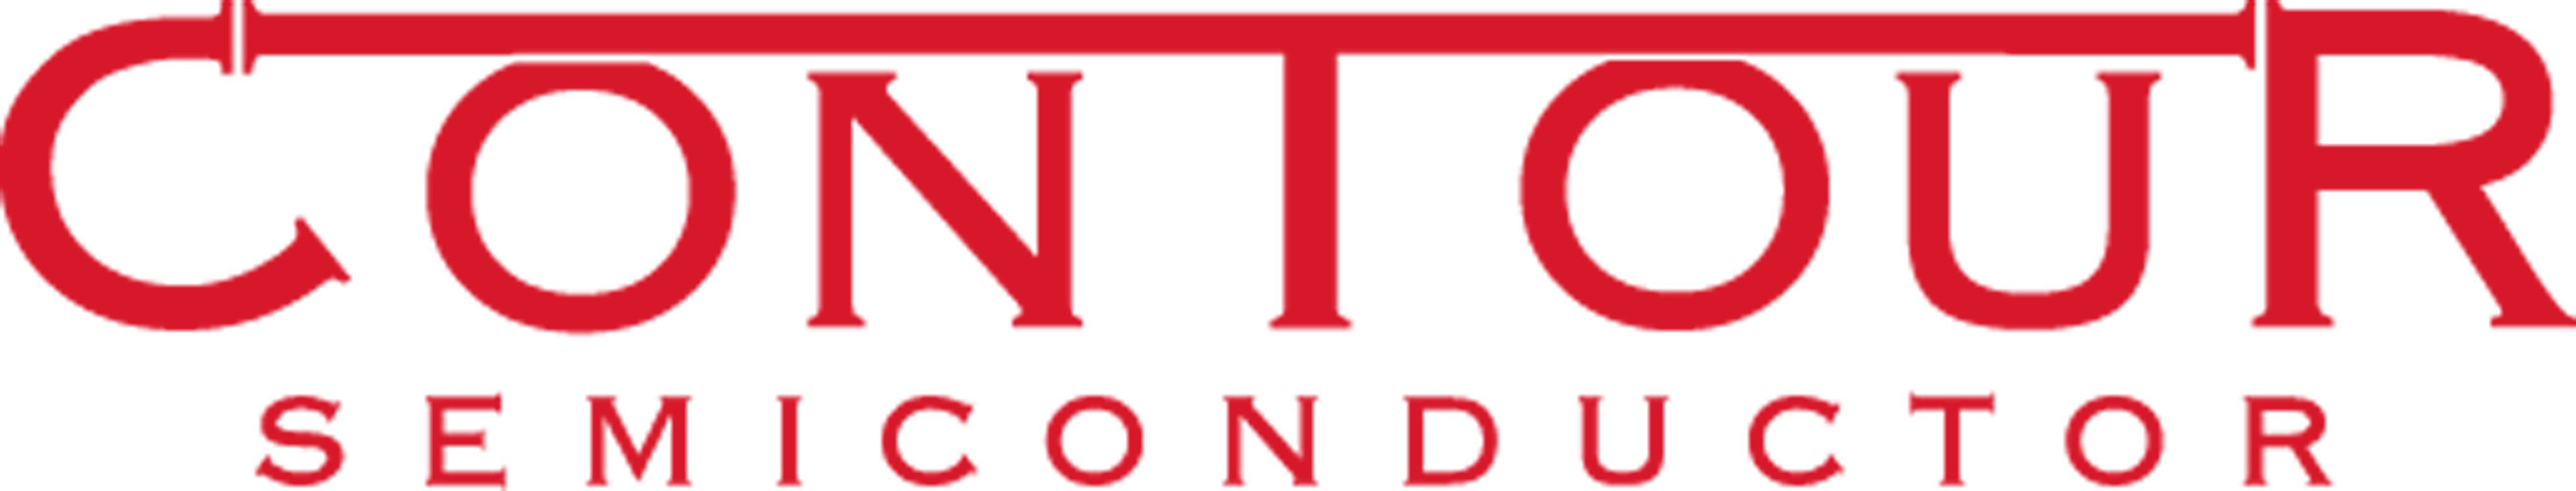 Contour Semiconductor, Inc. logo